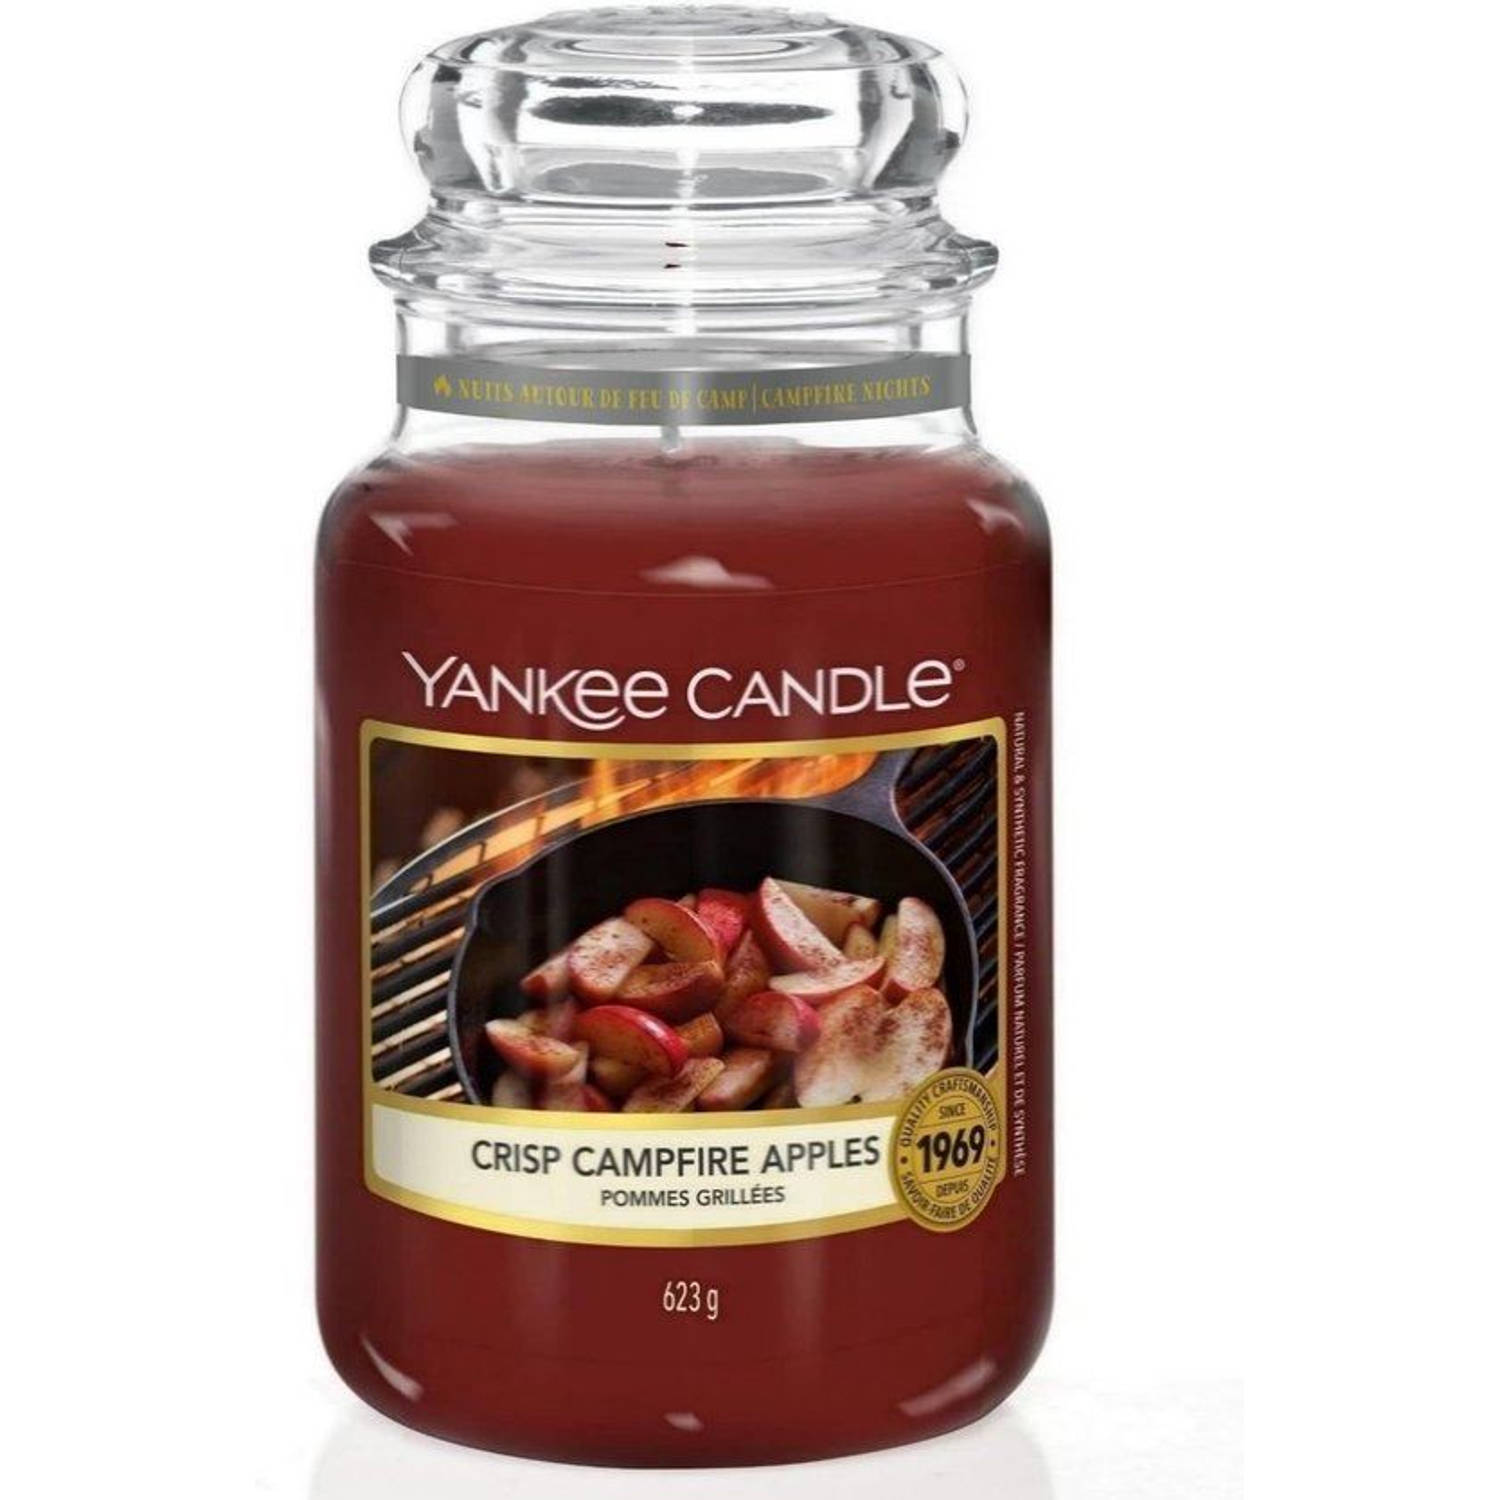 Yankee Candle - Crisp Campfire Apples geurkaars - Large Jar - Tot 150 branduren